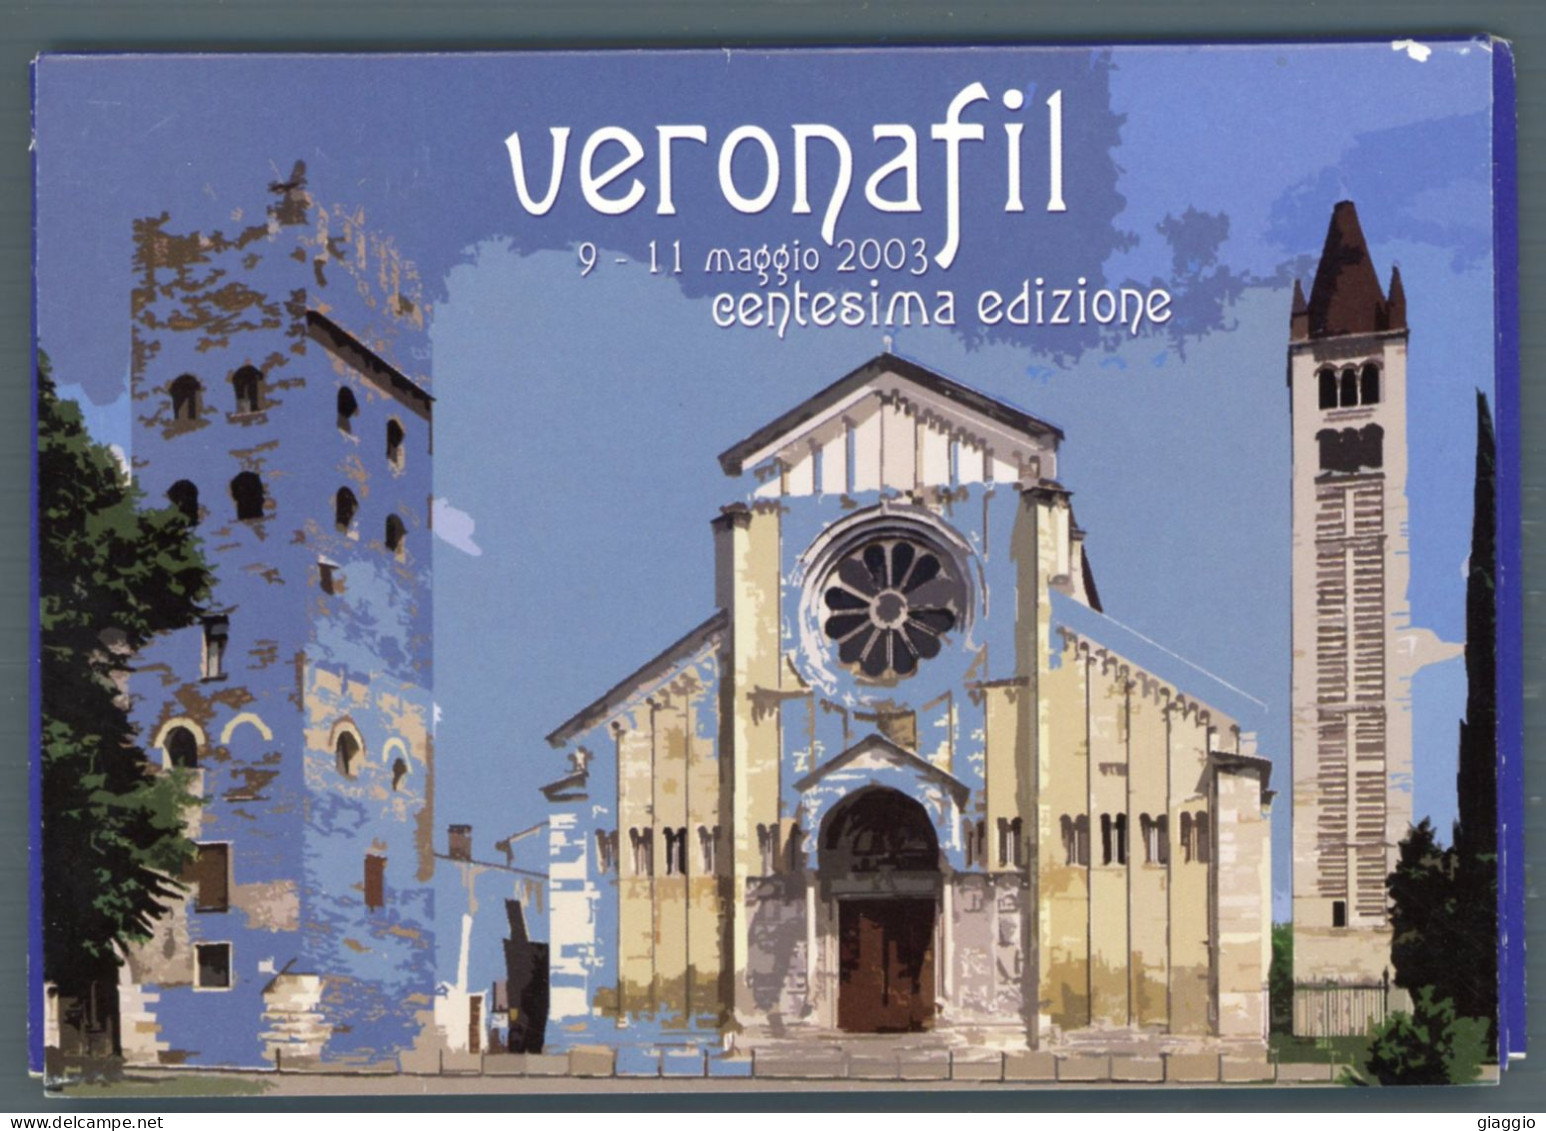 °°° Francobolli - N. 1874 - Vaticano Cartoline Postali Veronafil °°° - Enteros Postales